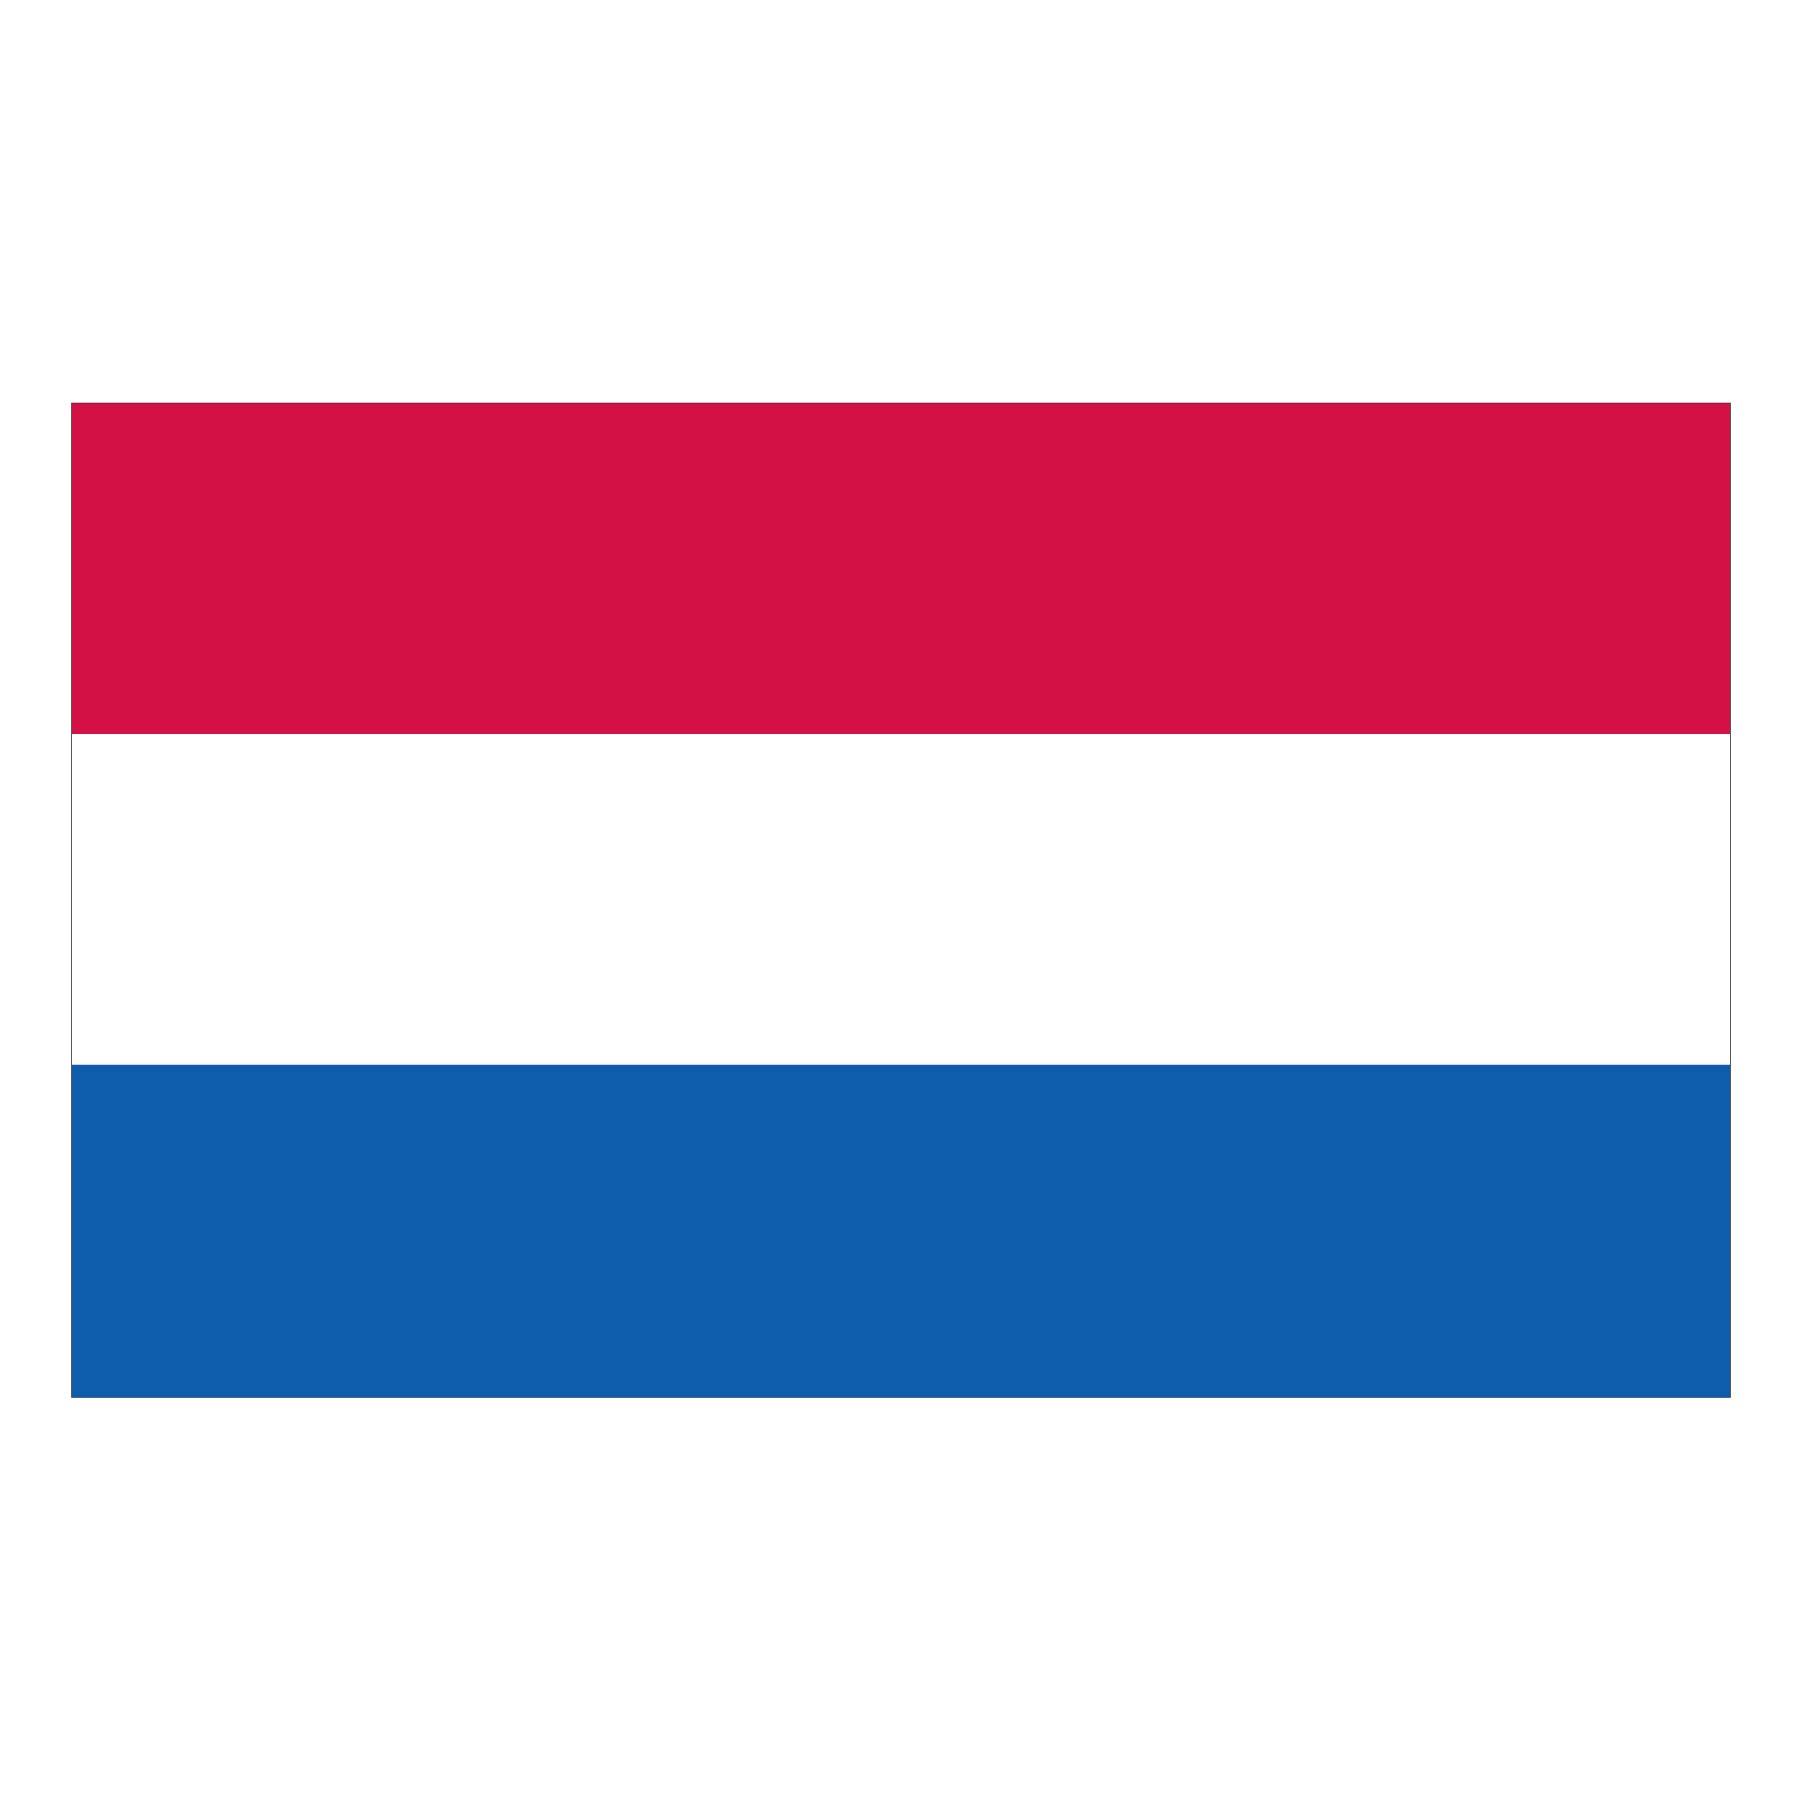 Как выглядит флаг картинка. Флаг Нидерландов. Королевство Нидерланды флаг. Флаг Нидерландов флаг Нидерландов. Нидерланды флаг Нидерланды.